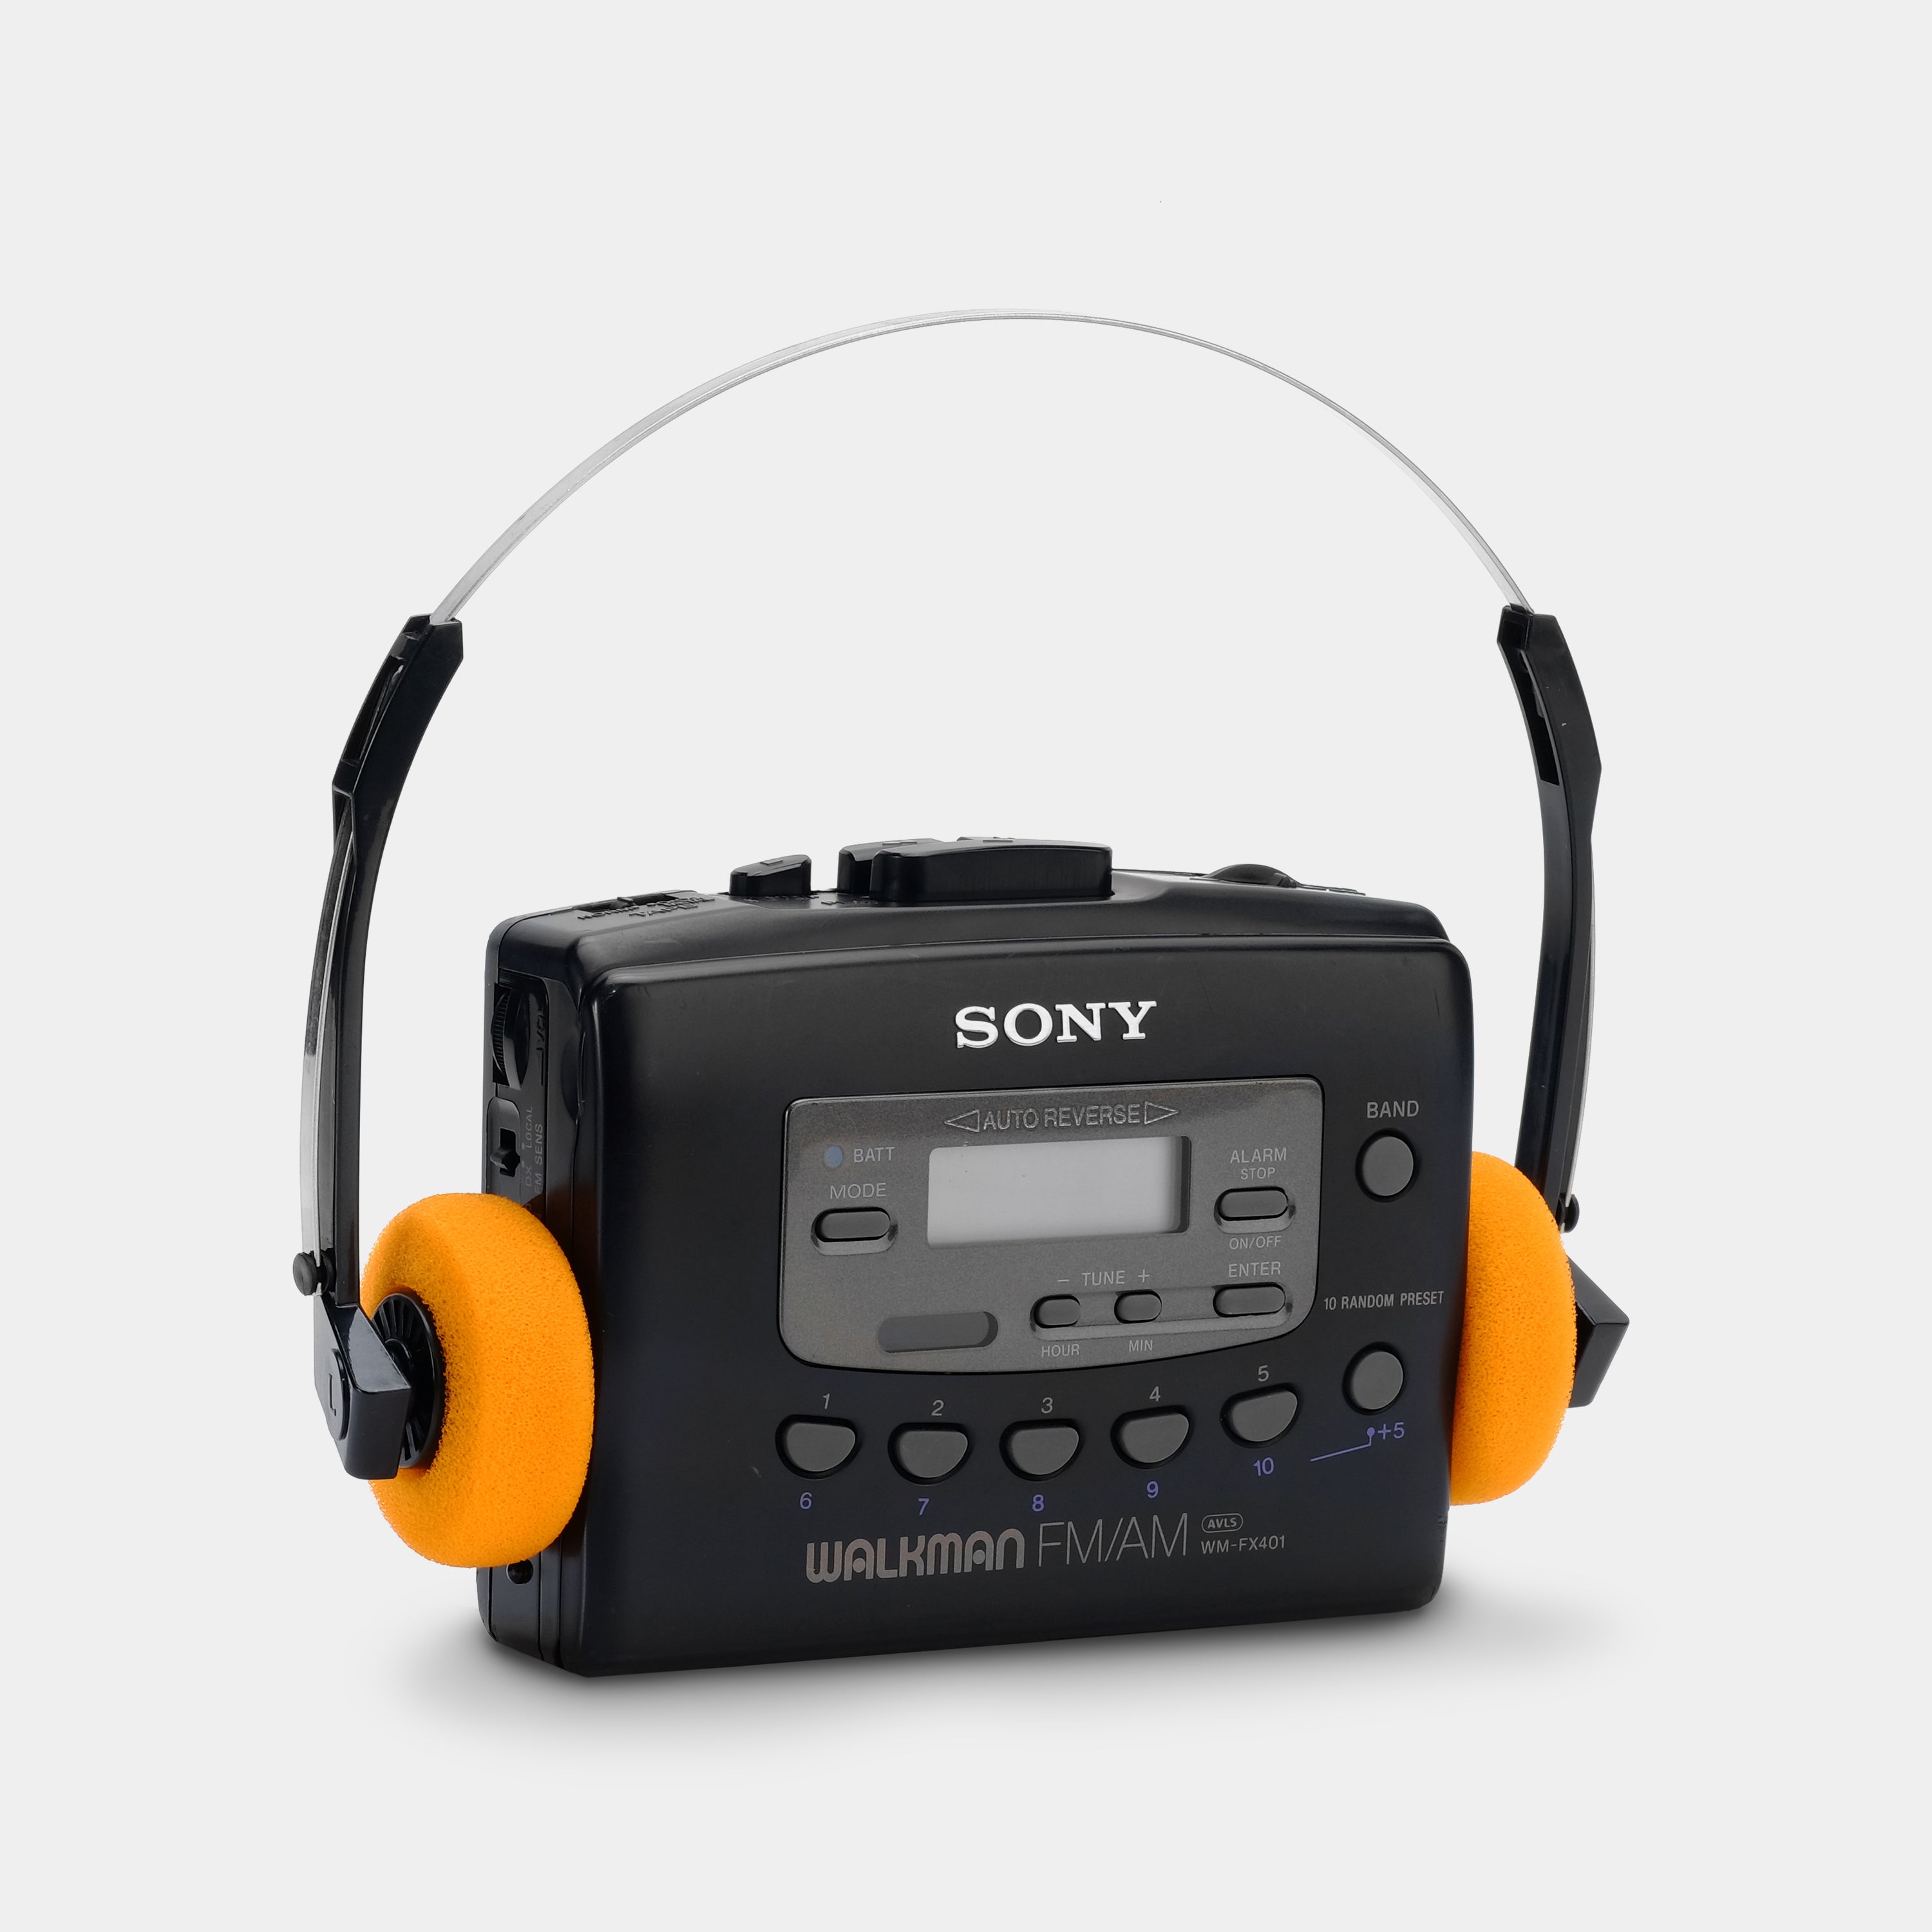 Sony Walkman WM-FX401 Auto Reverse AM/FM Portable Cassette Player